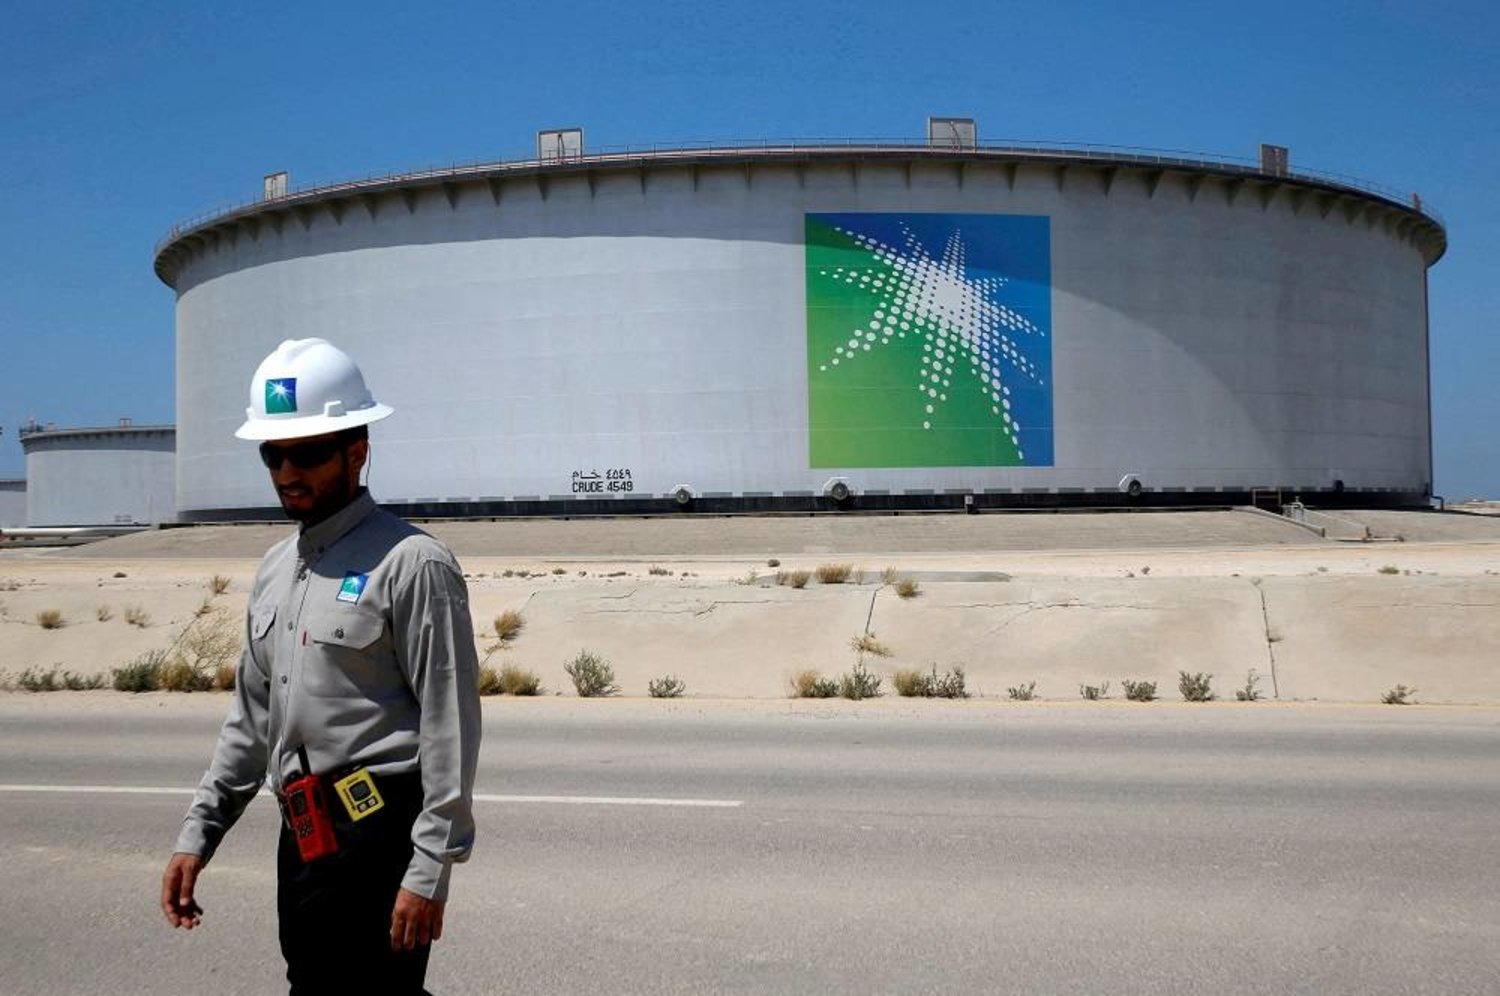 An Aramco employee walks near an oil tank at Saudi Aramco's Ras Tanura oil refinery and oil terminal in Saudi Arabia May 21, 2018. (Reuters)